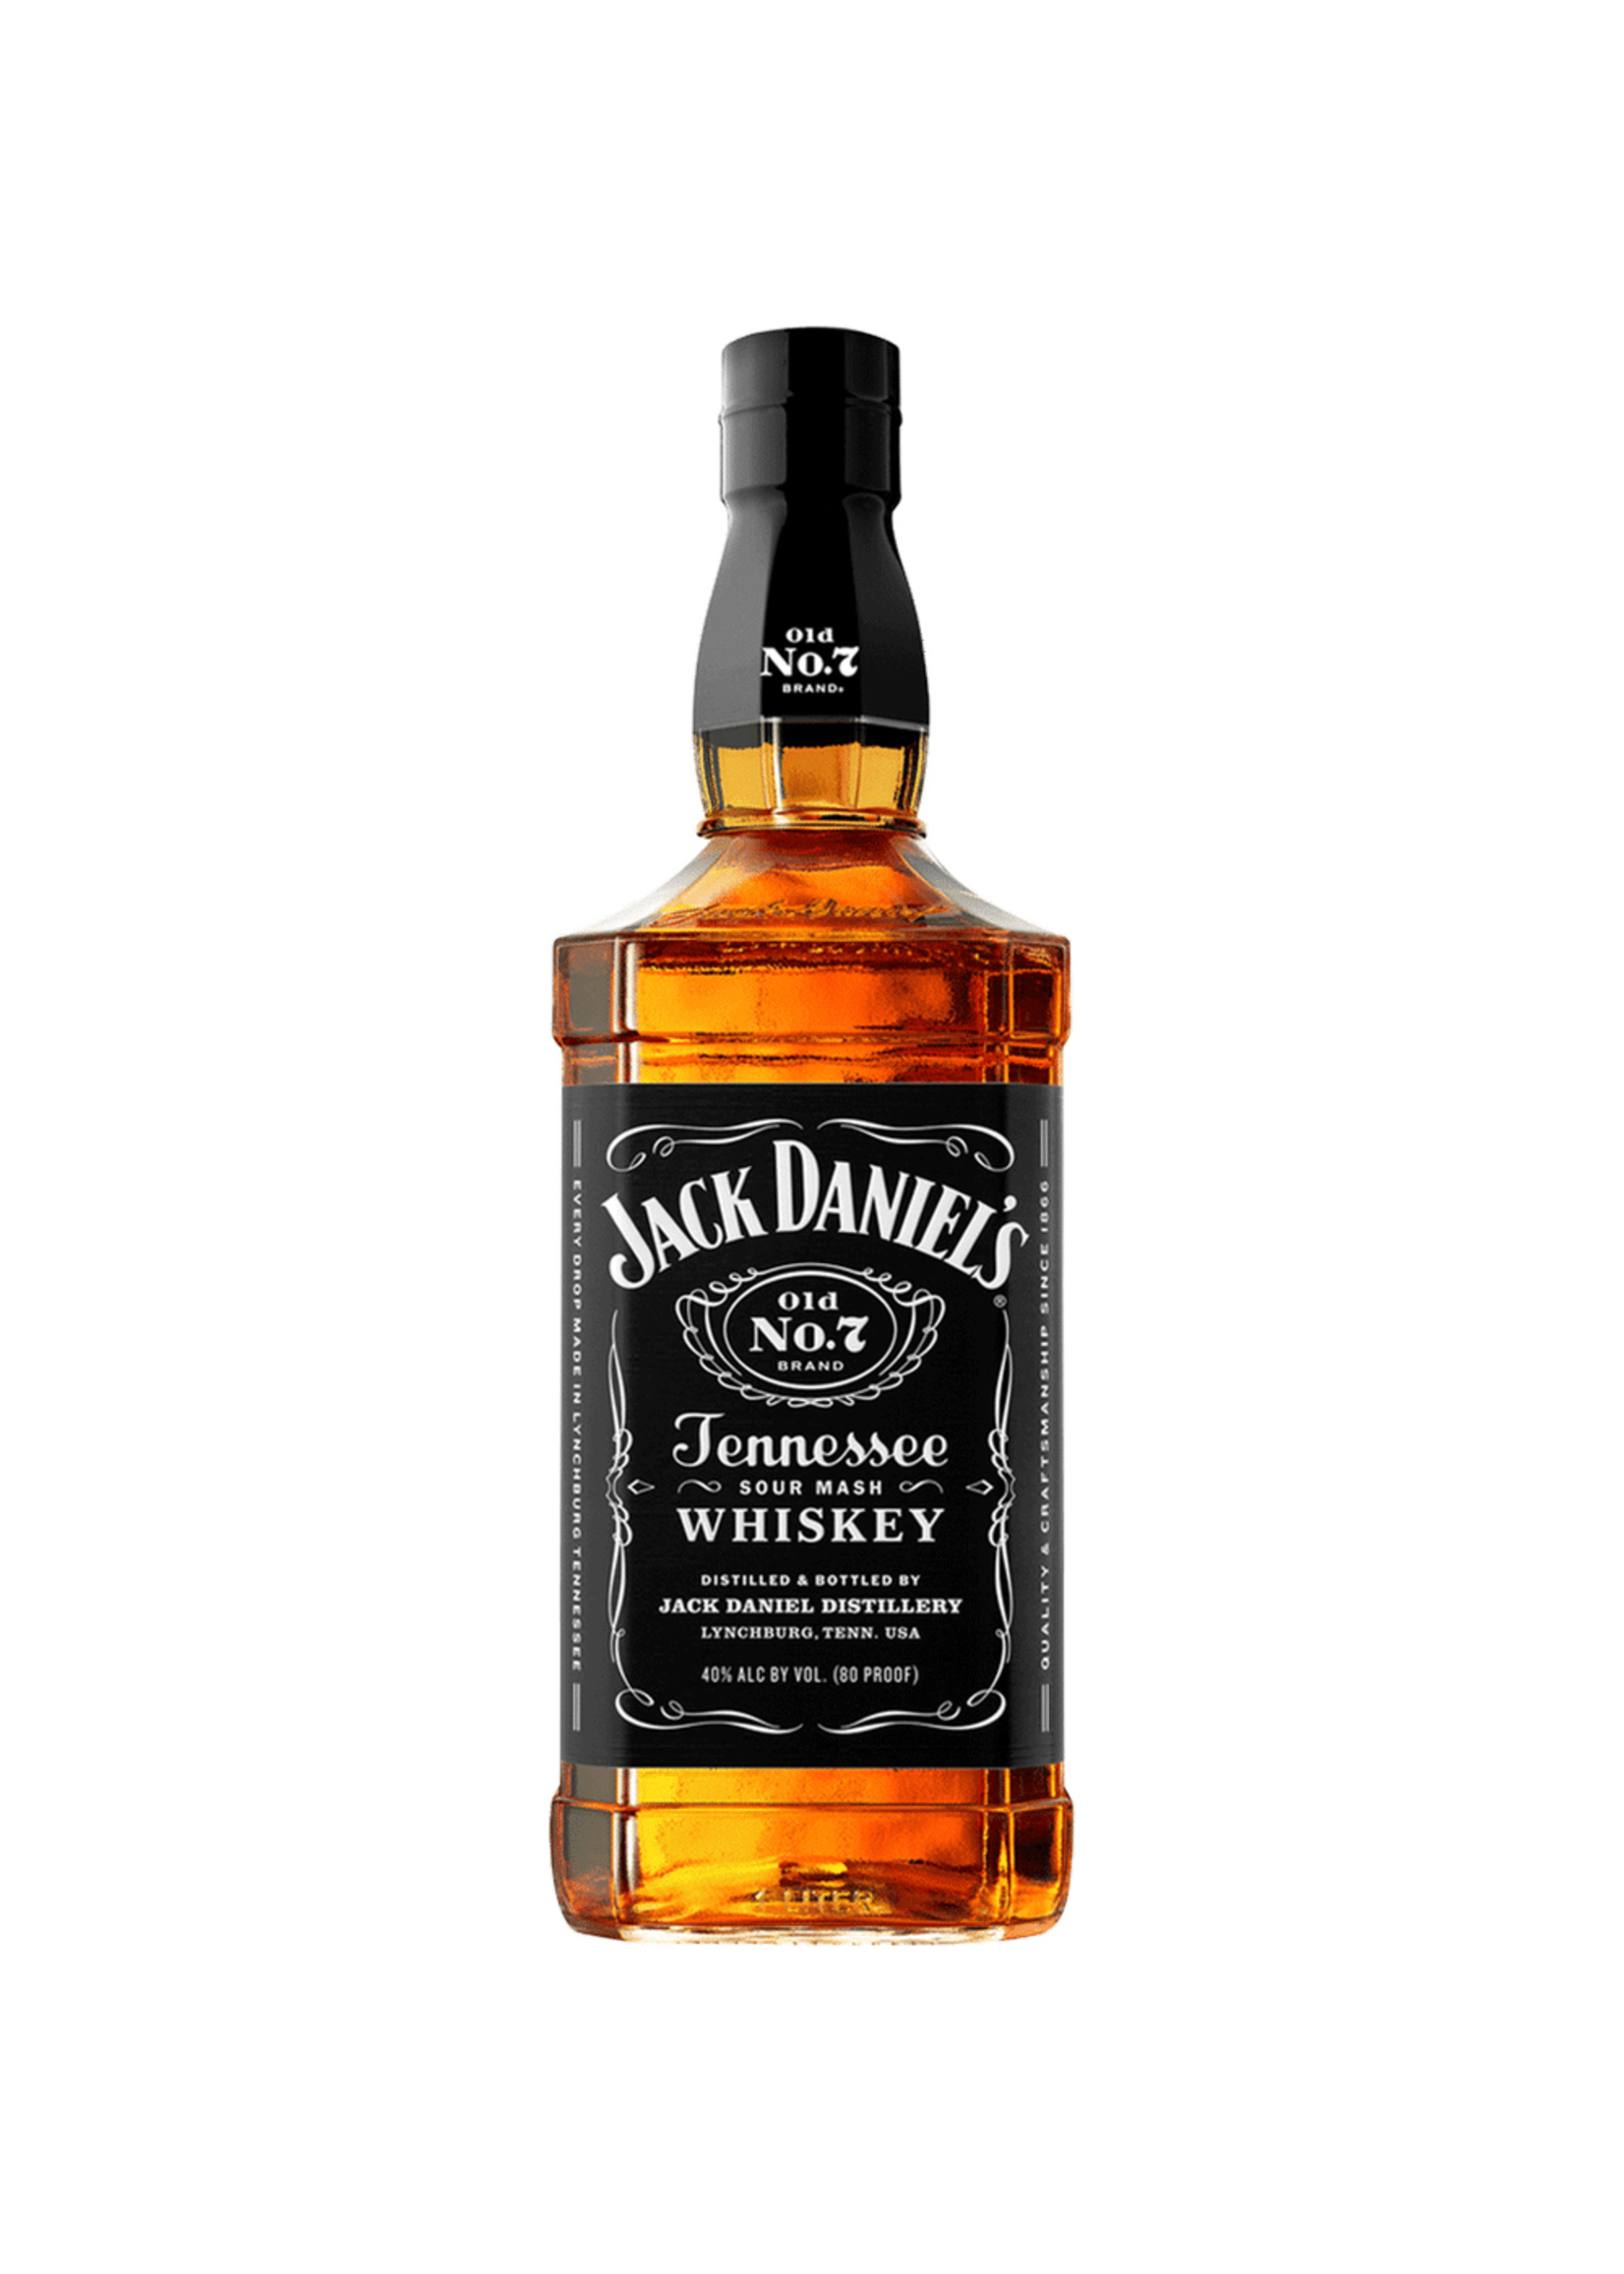 Jack Daniels Jack Daniel's Old No. 7 Tennessee Whiskey 80Proof 1 Ltr